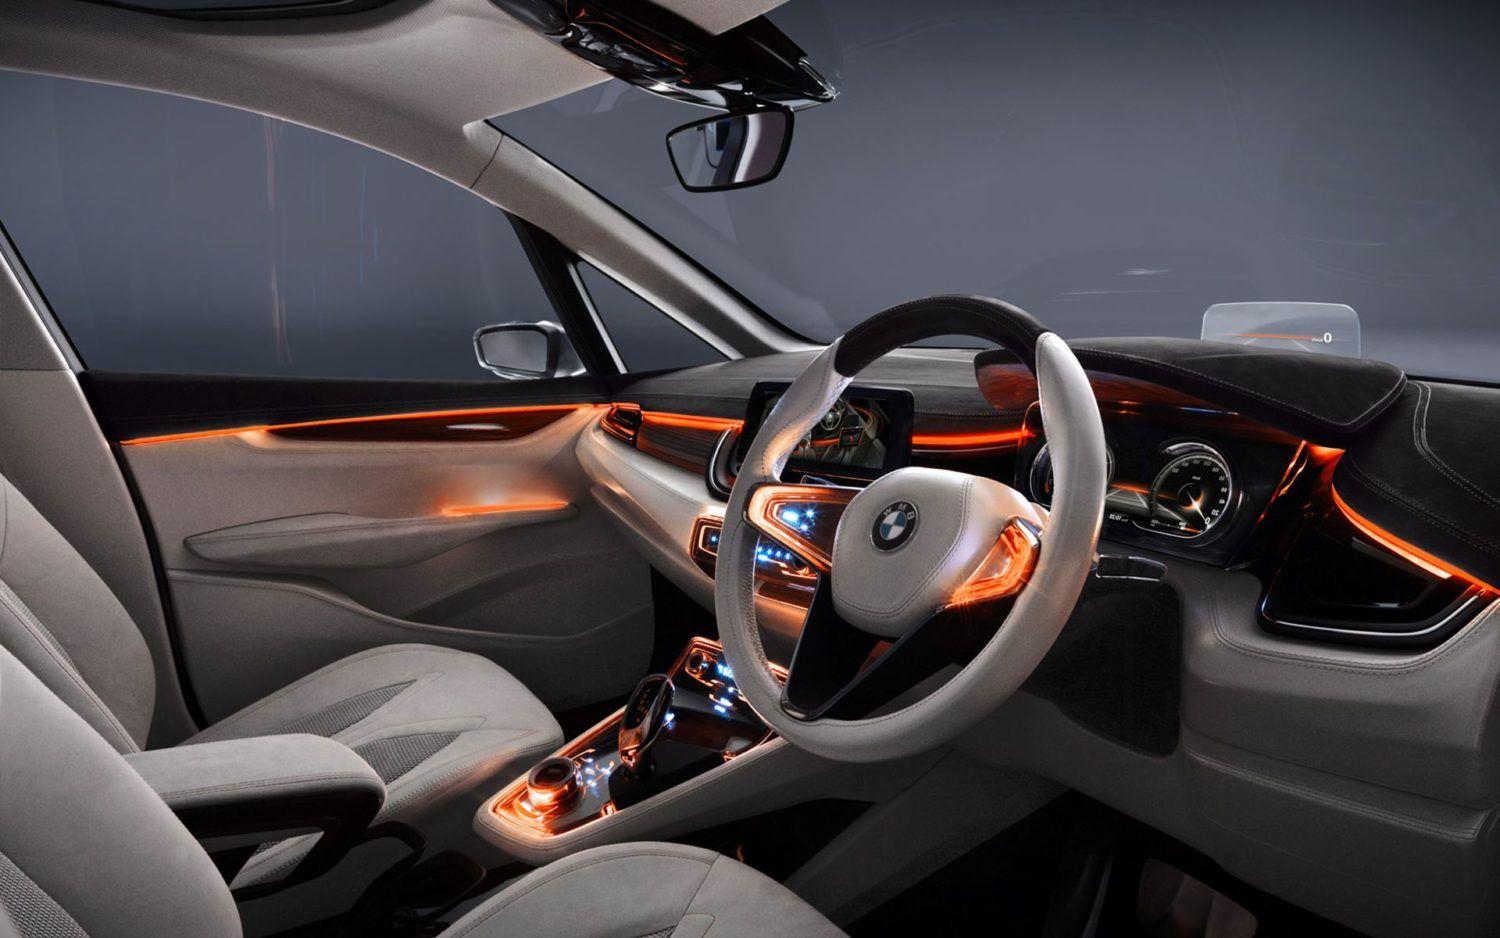 BMW X7. Rear Wallpaper. Autocar Release News